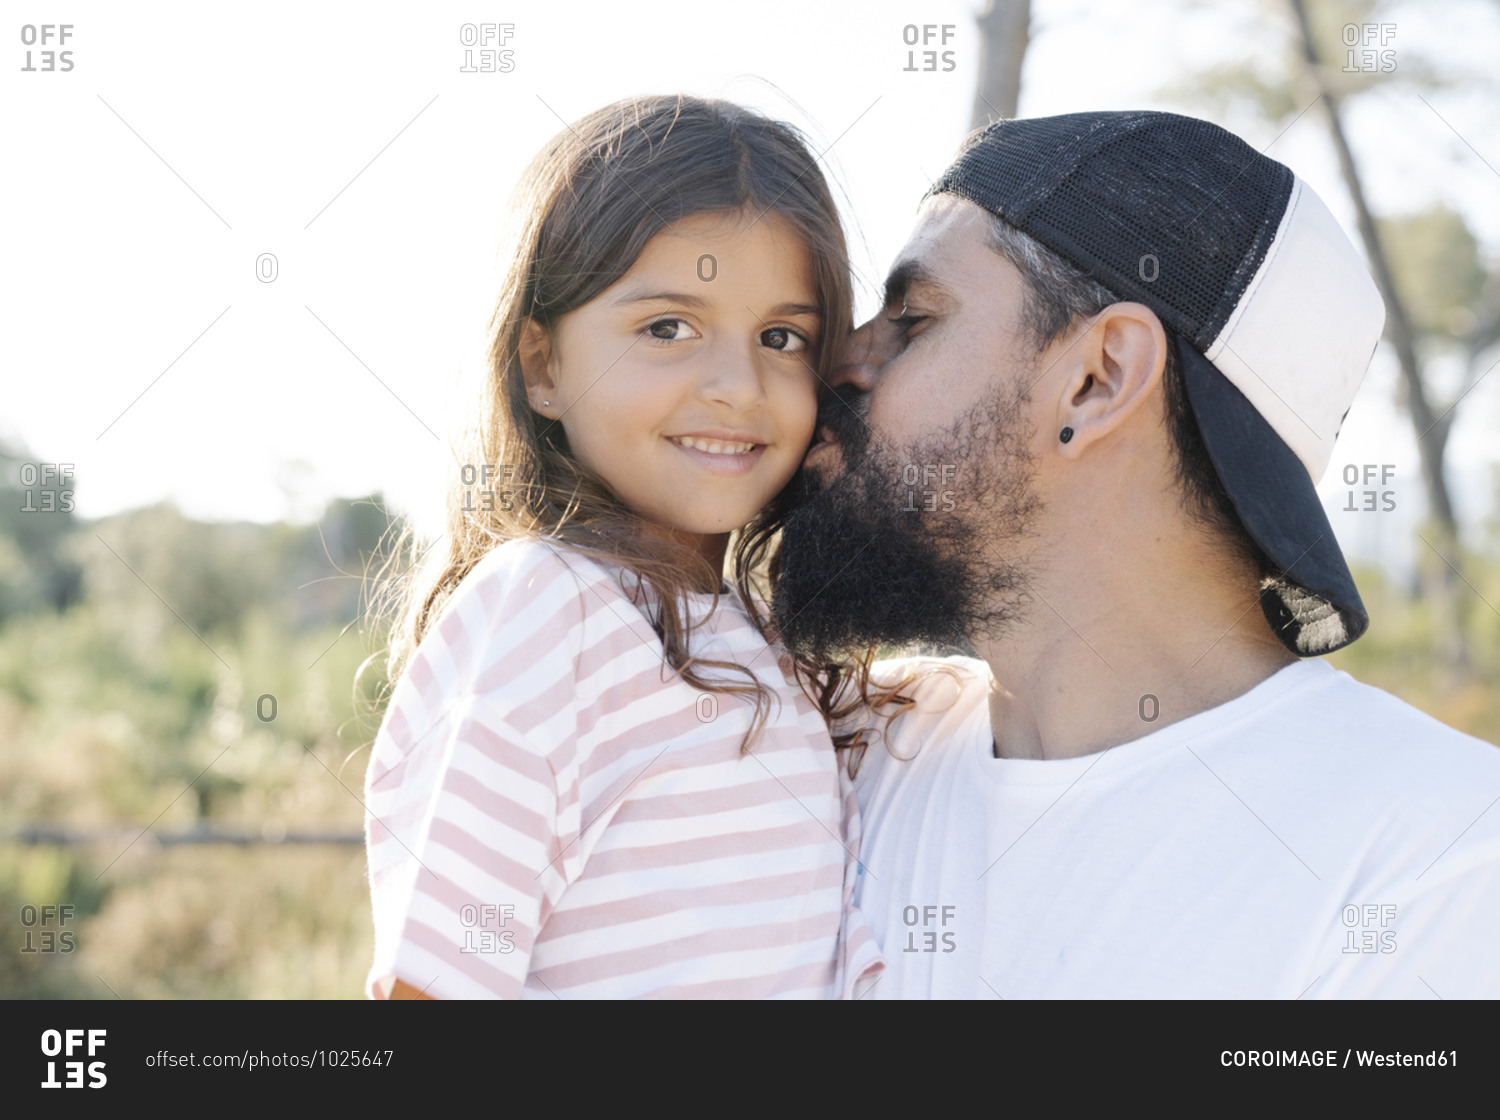 Mature man kissing cute daughter at park during sunset